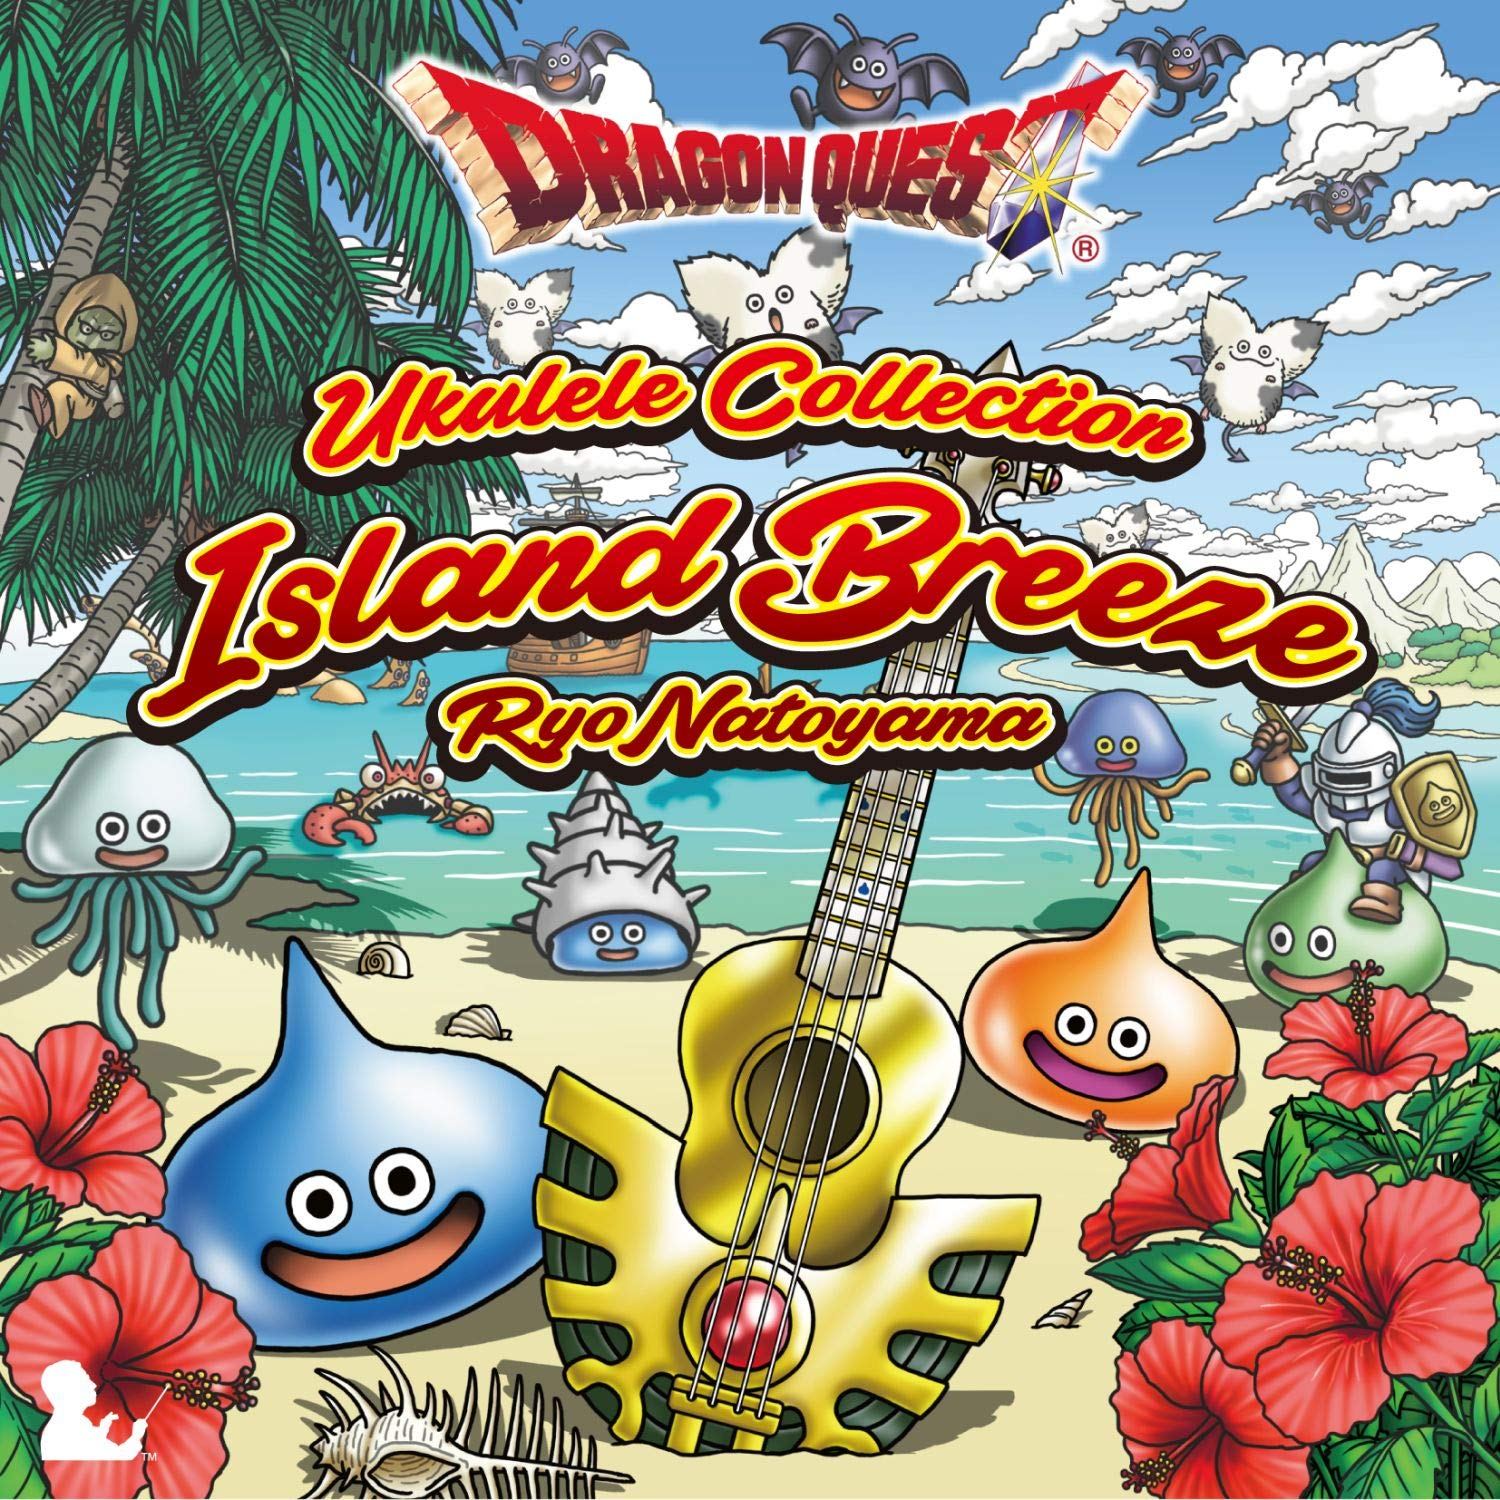 Dragon Quest Ukulele Collection Island Breeze